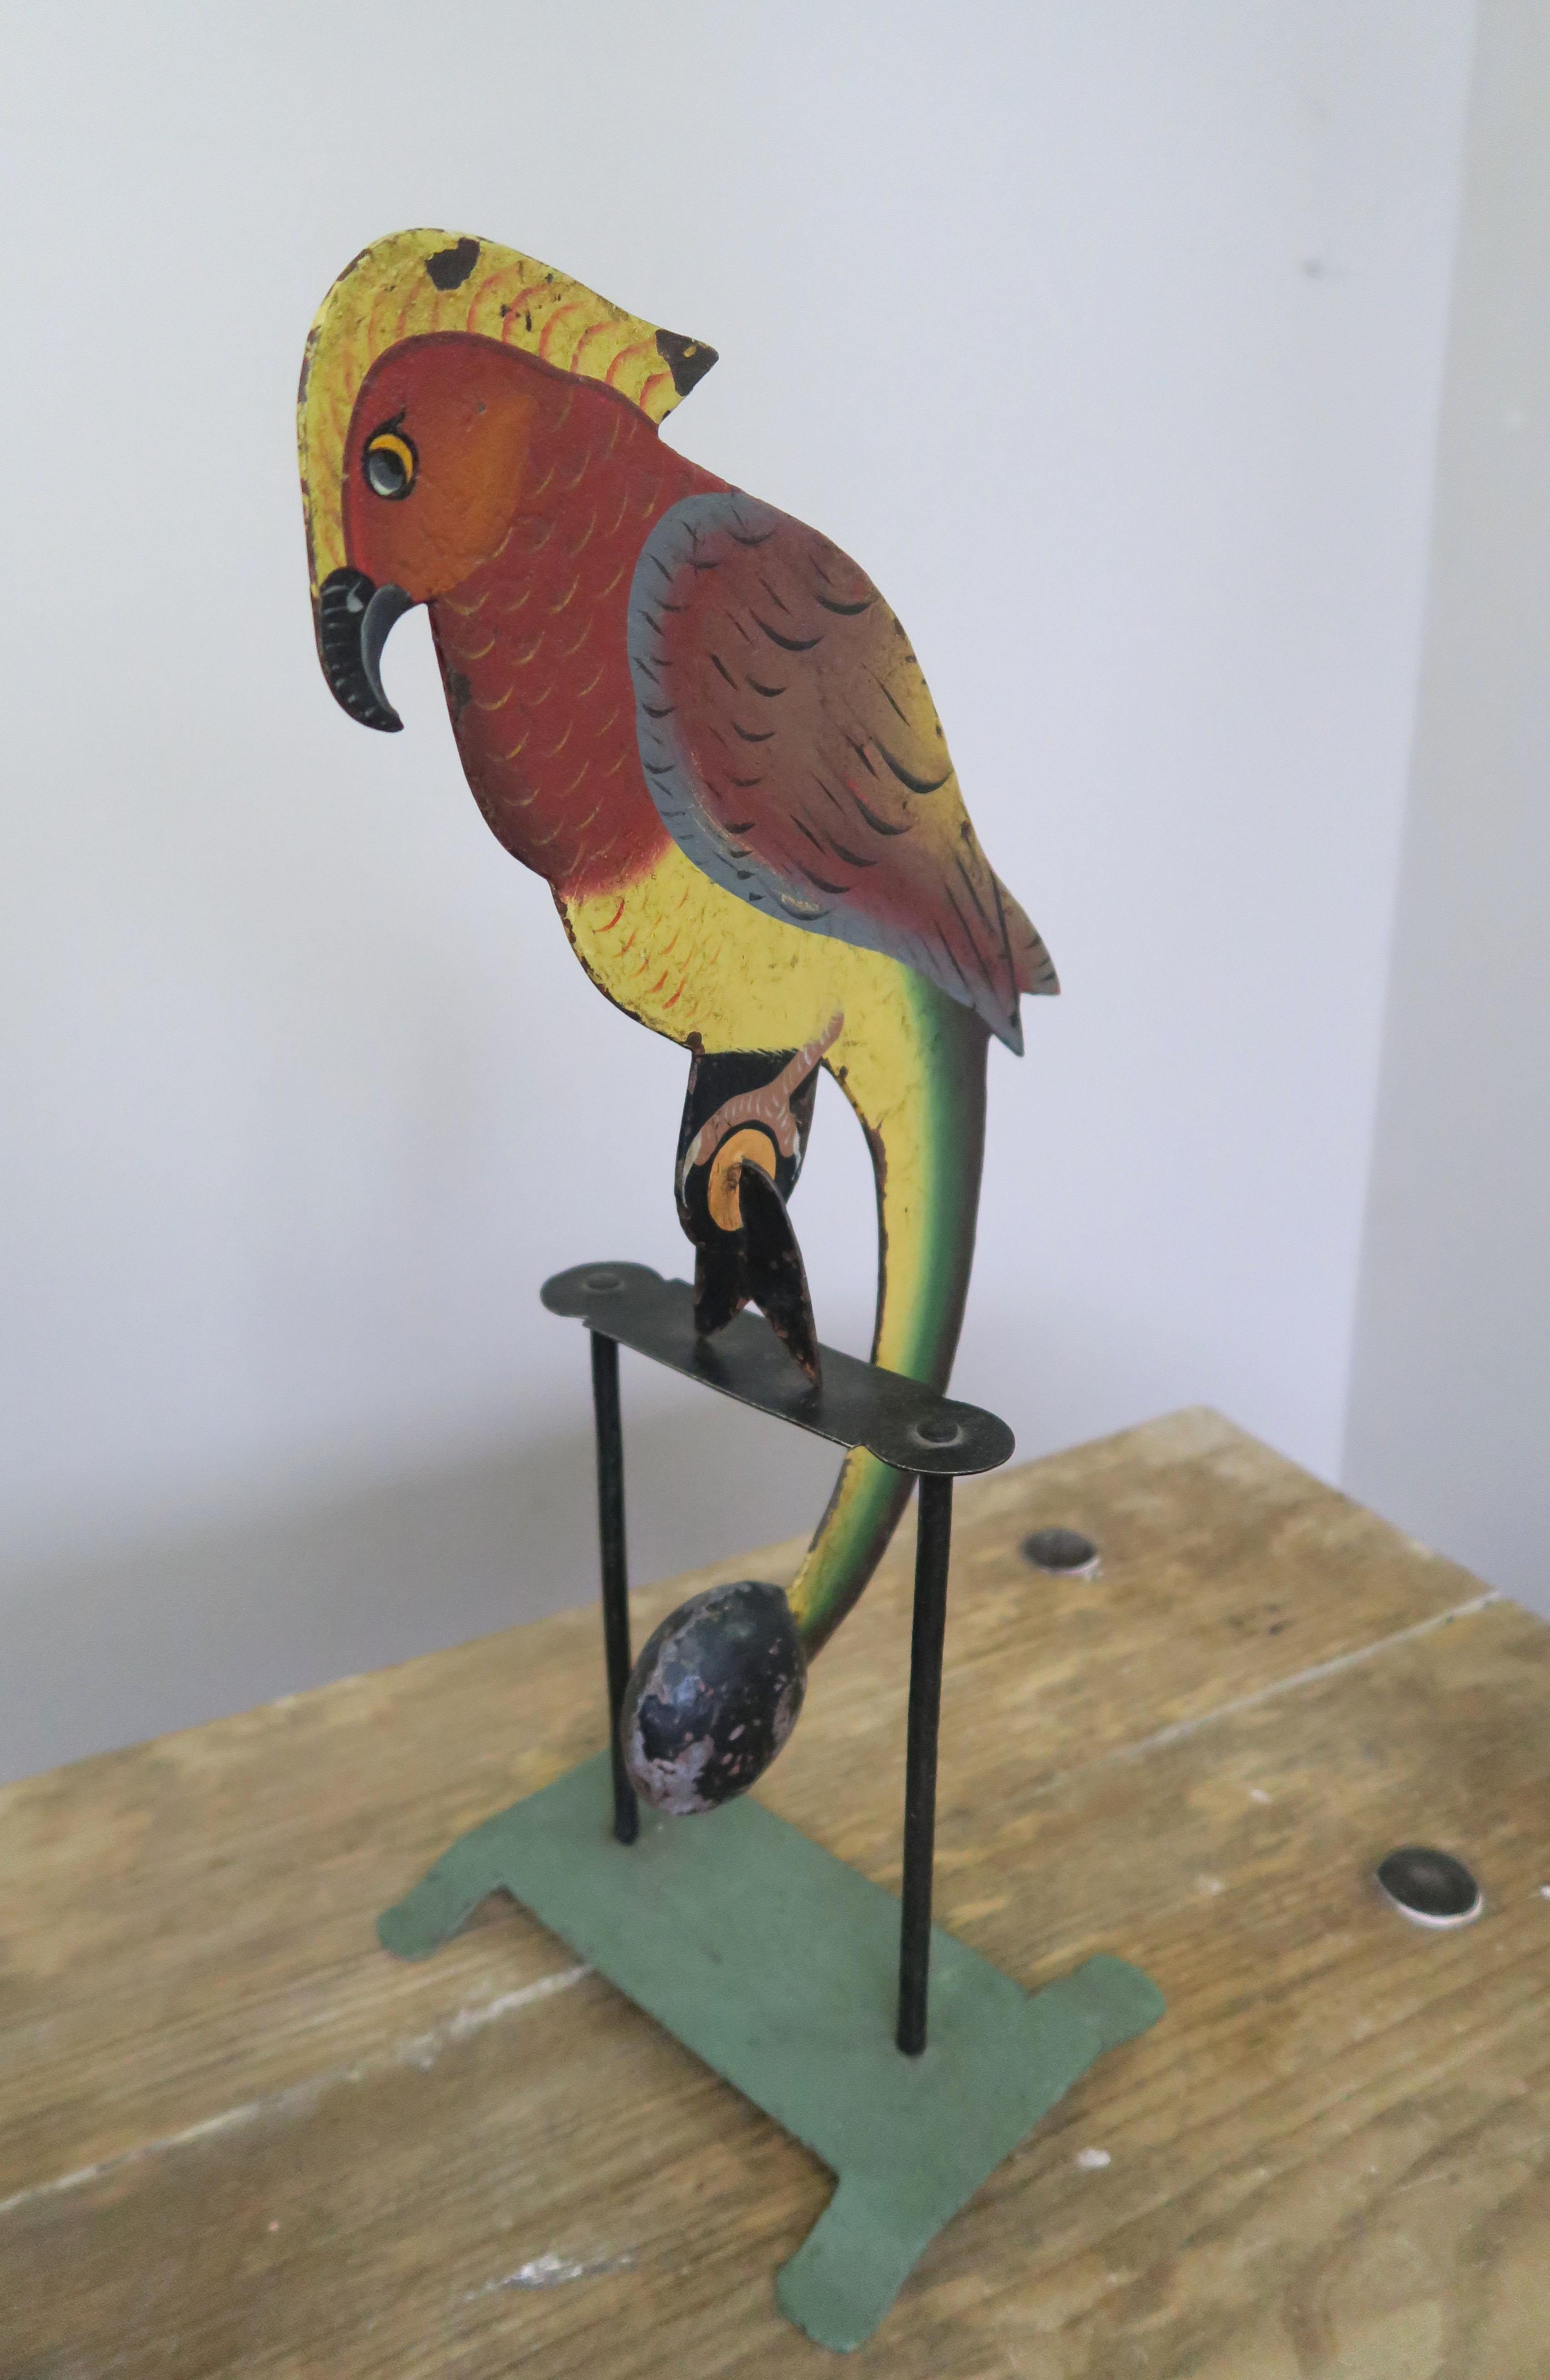 Charming American Folk Art Piece Depicting Balancing Parrot 1